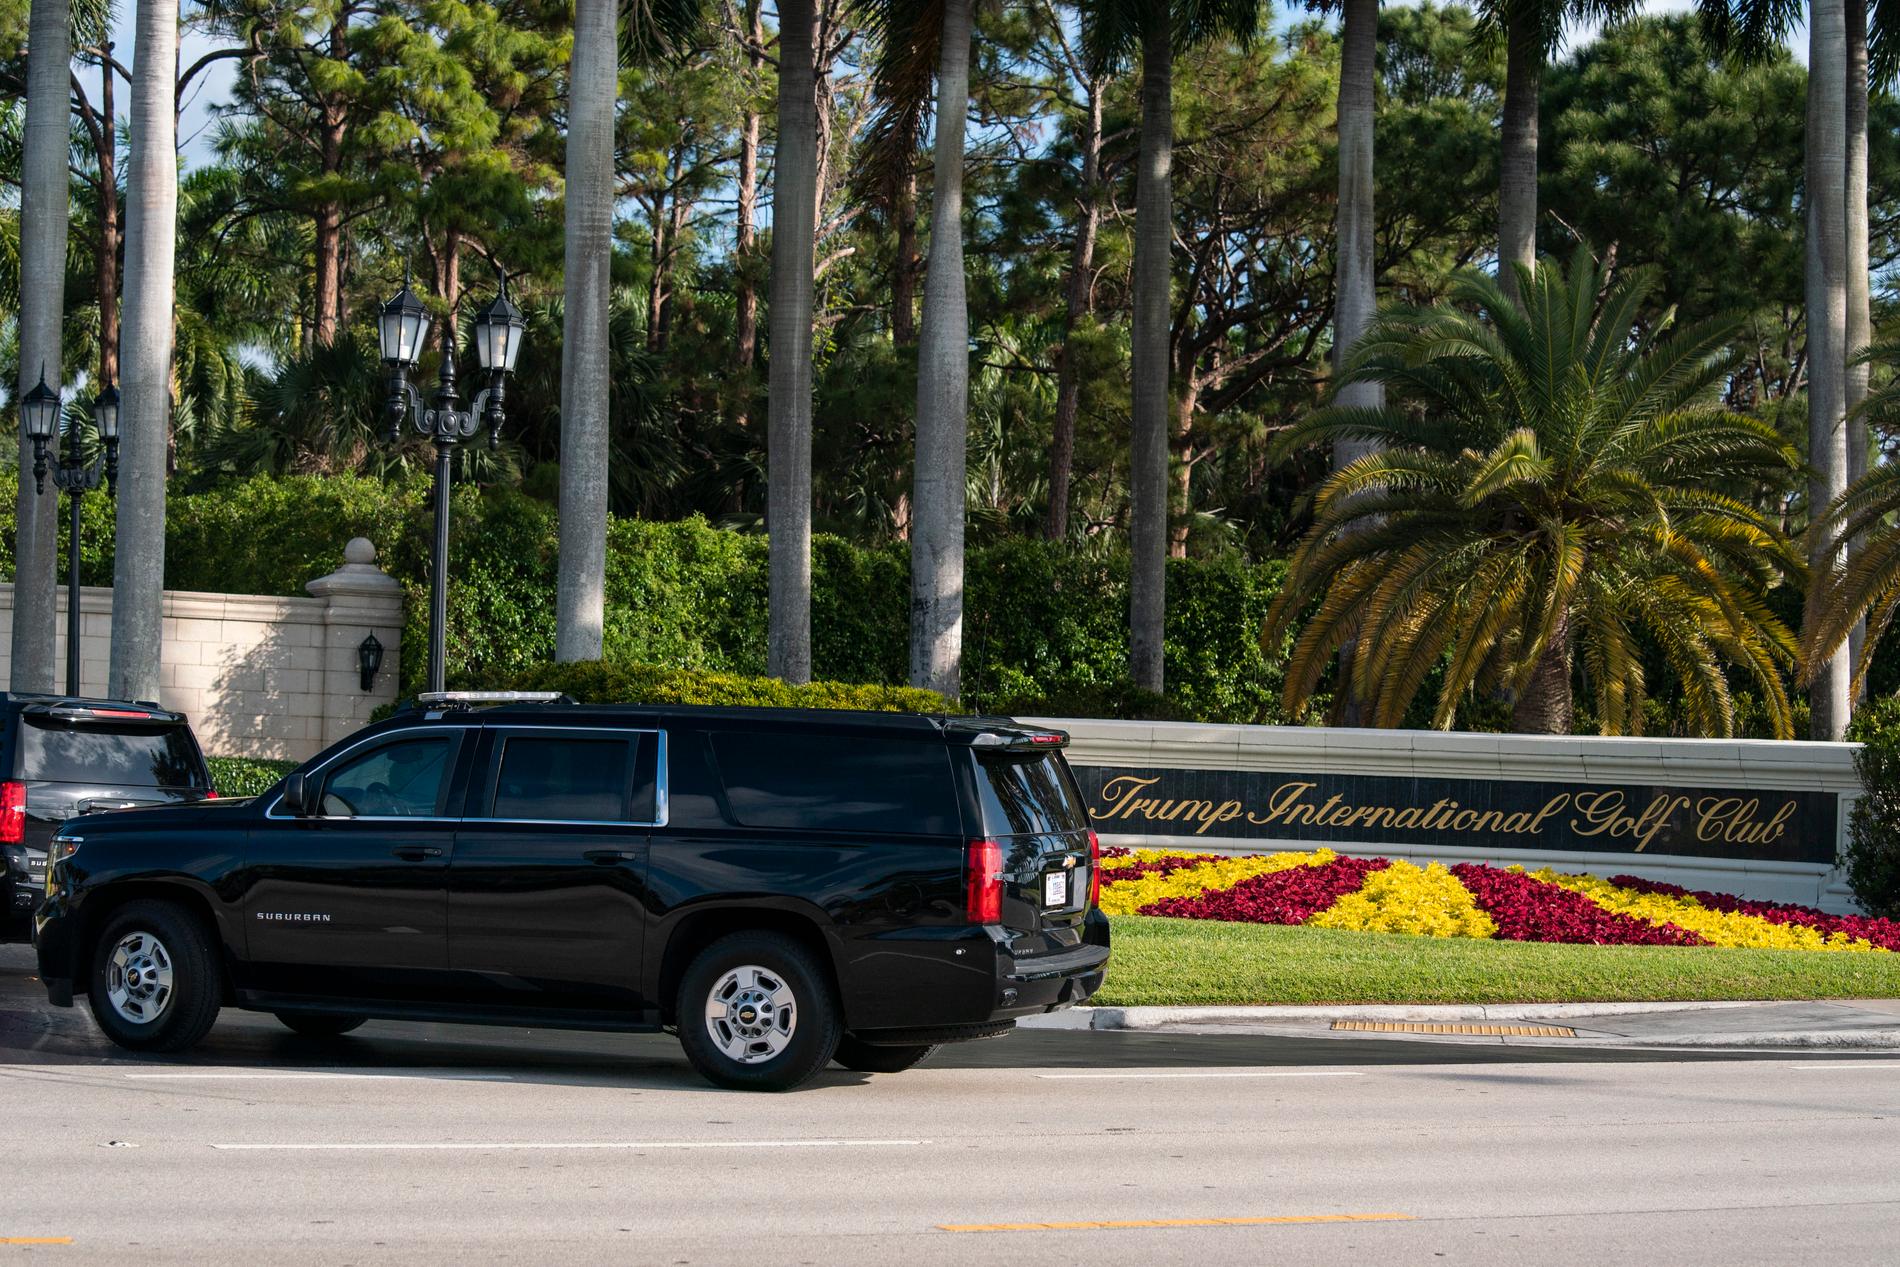 Trumps bil på golfklubben i Florida. 